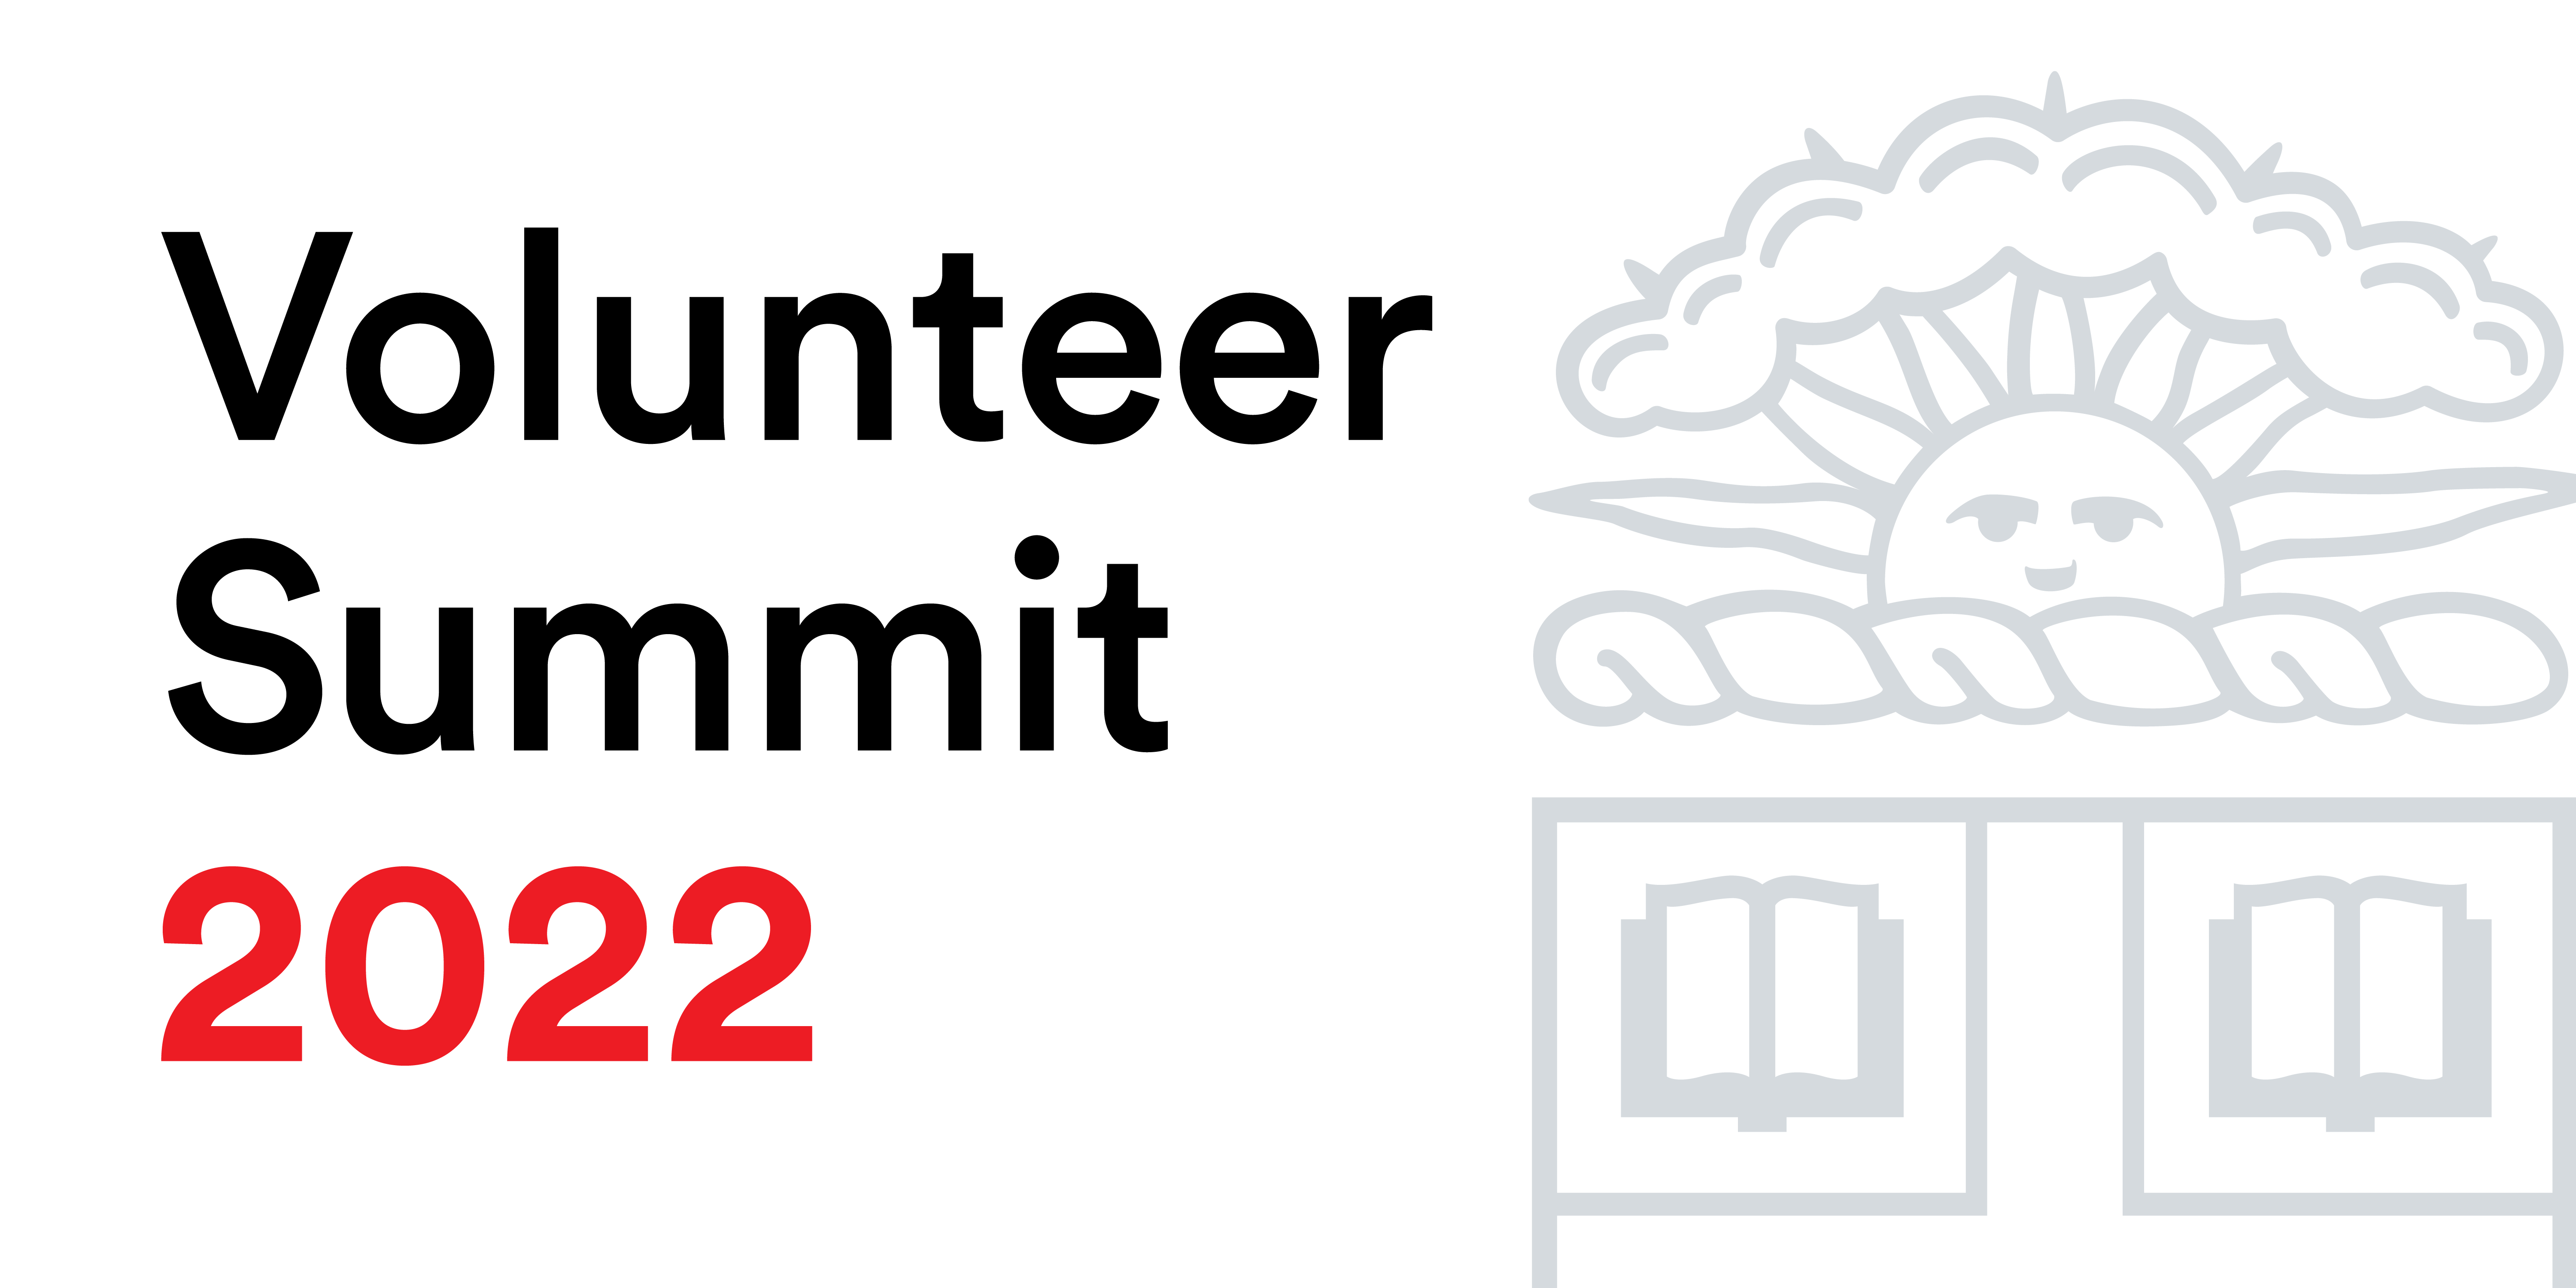 Volunteer Summit banner image